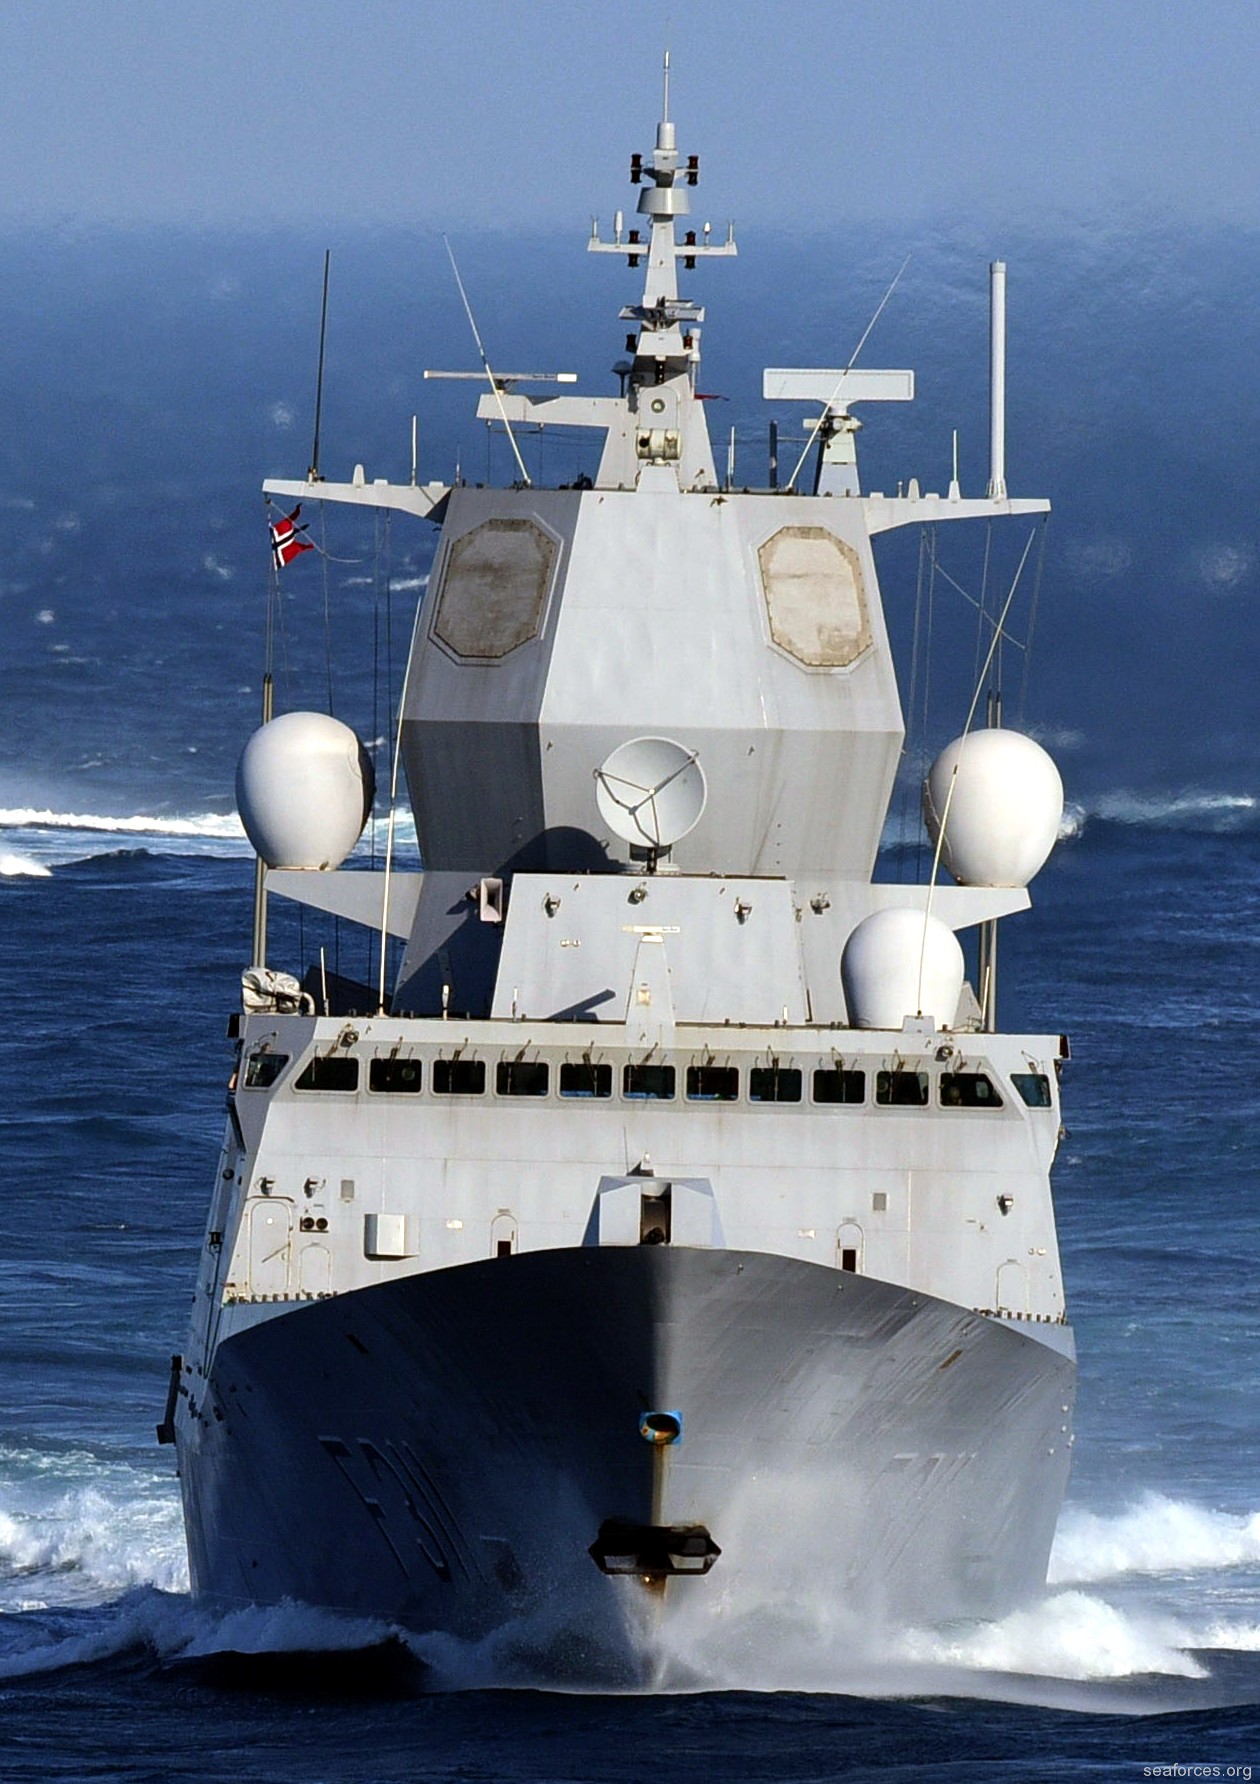 f-311 hnoms roald amundsen knm nansen class frigate royal norwegian navy sjoforsvaret 67 an/spy-1f radar